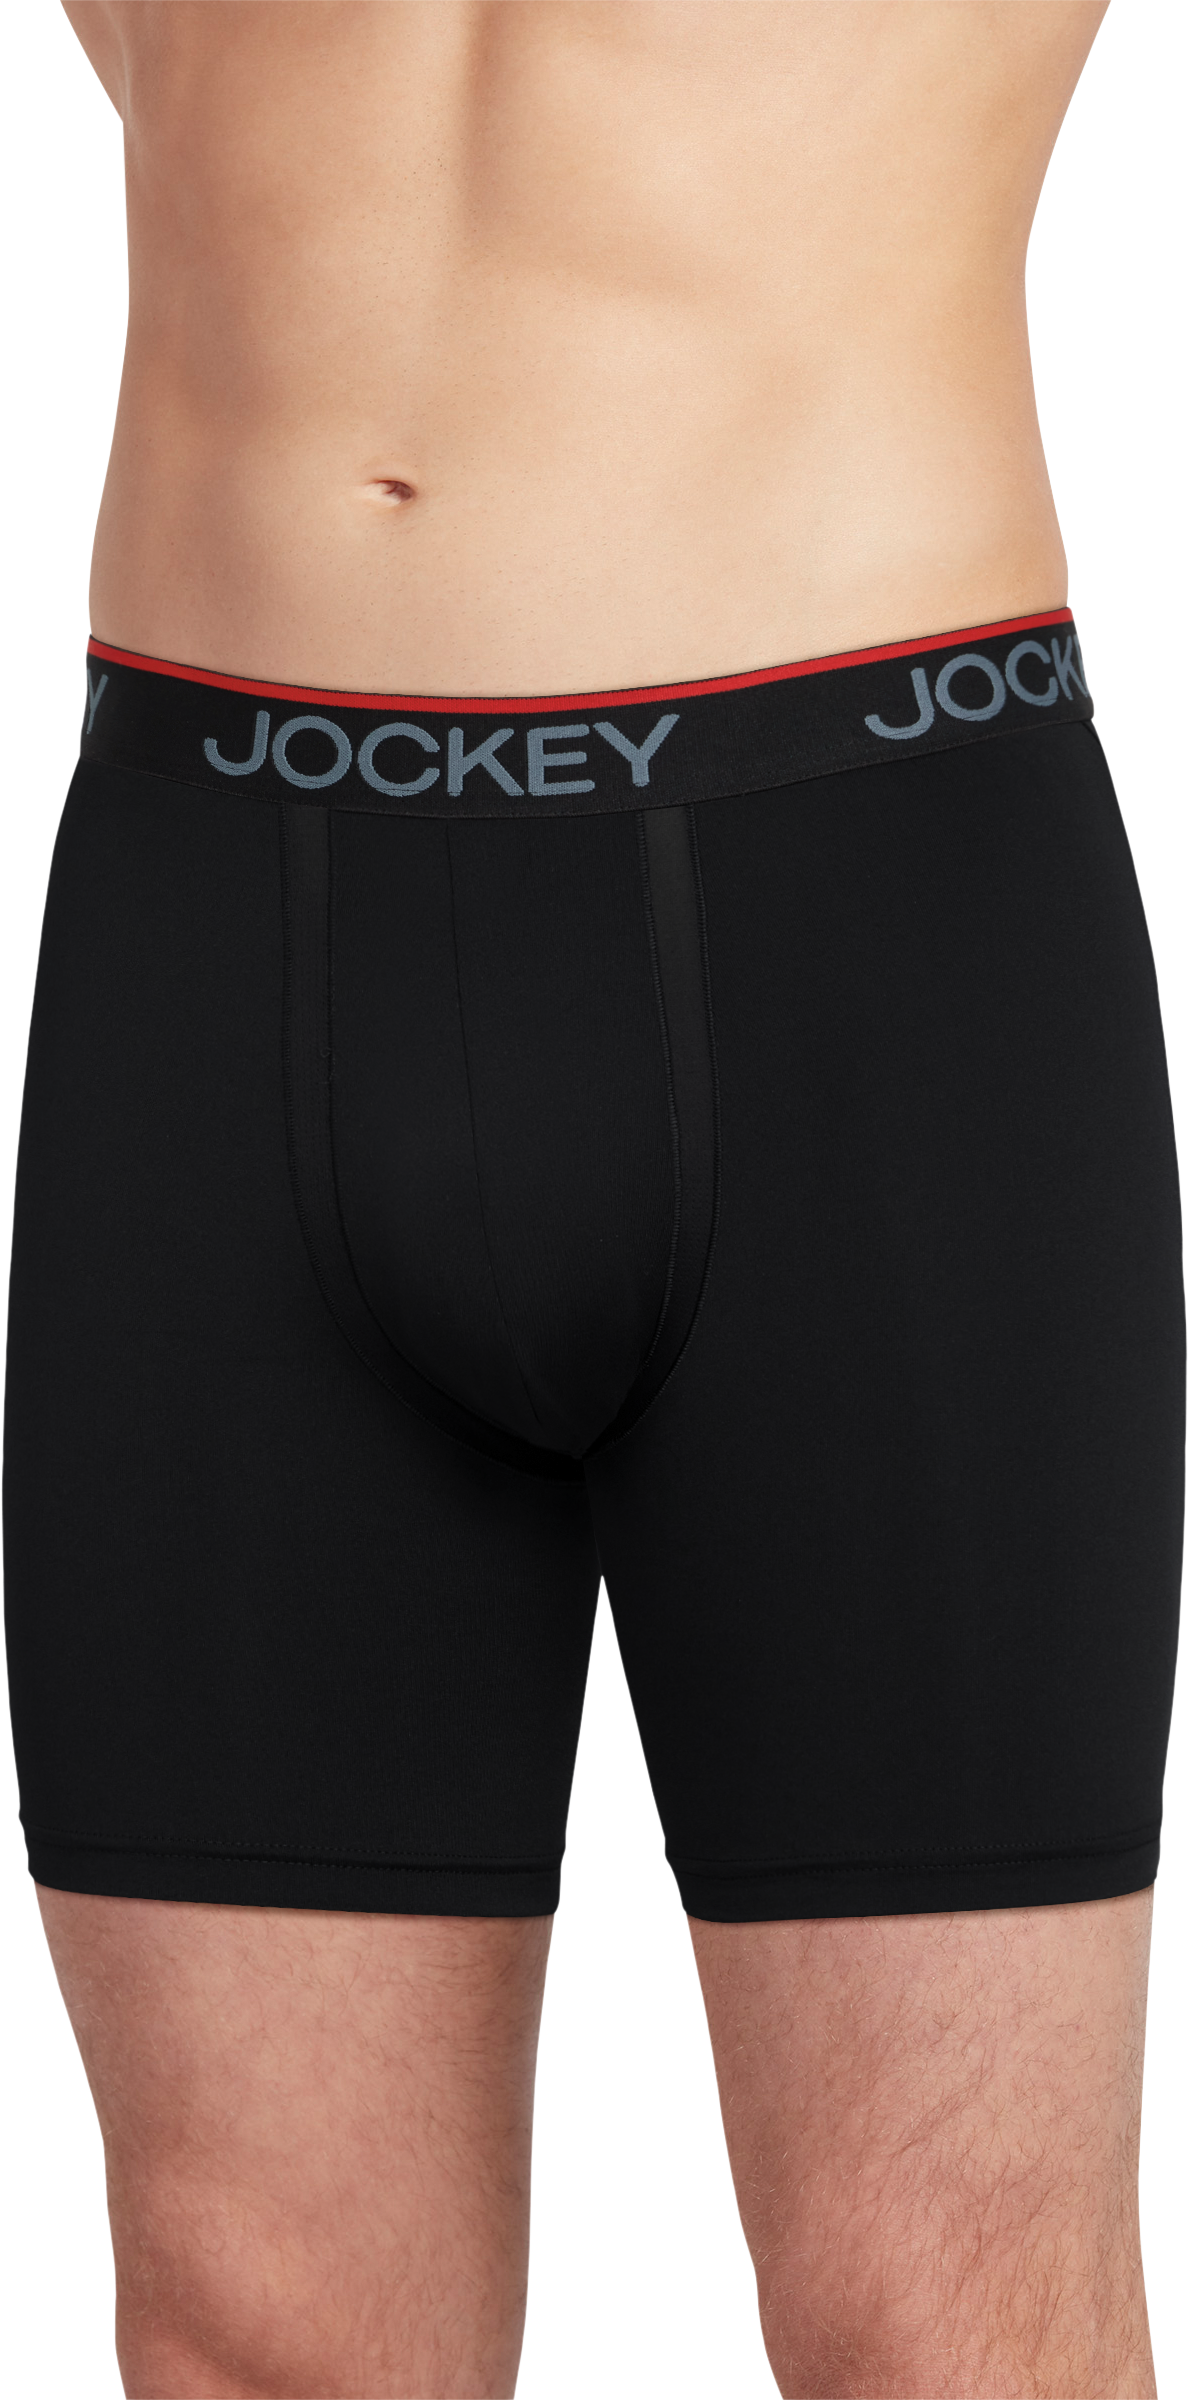 Jockey Chafe-Proof Microfiber Boxer Briefs for Men 3-Pack